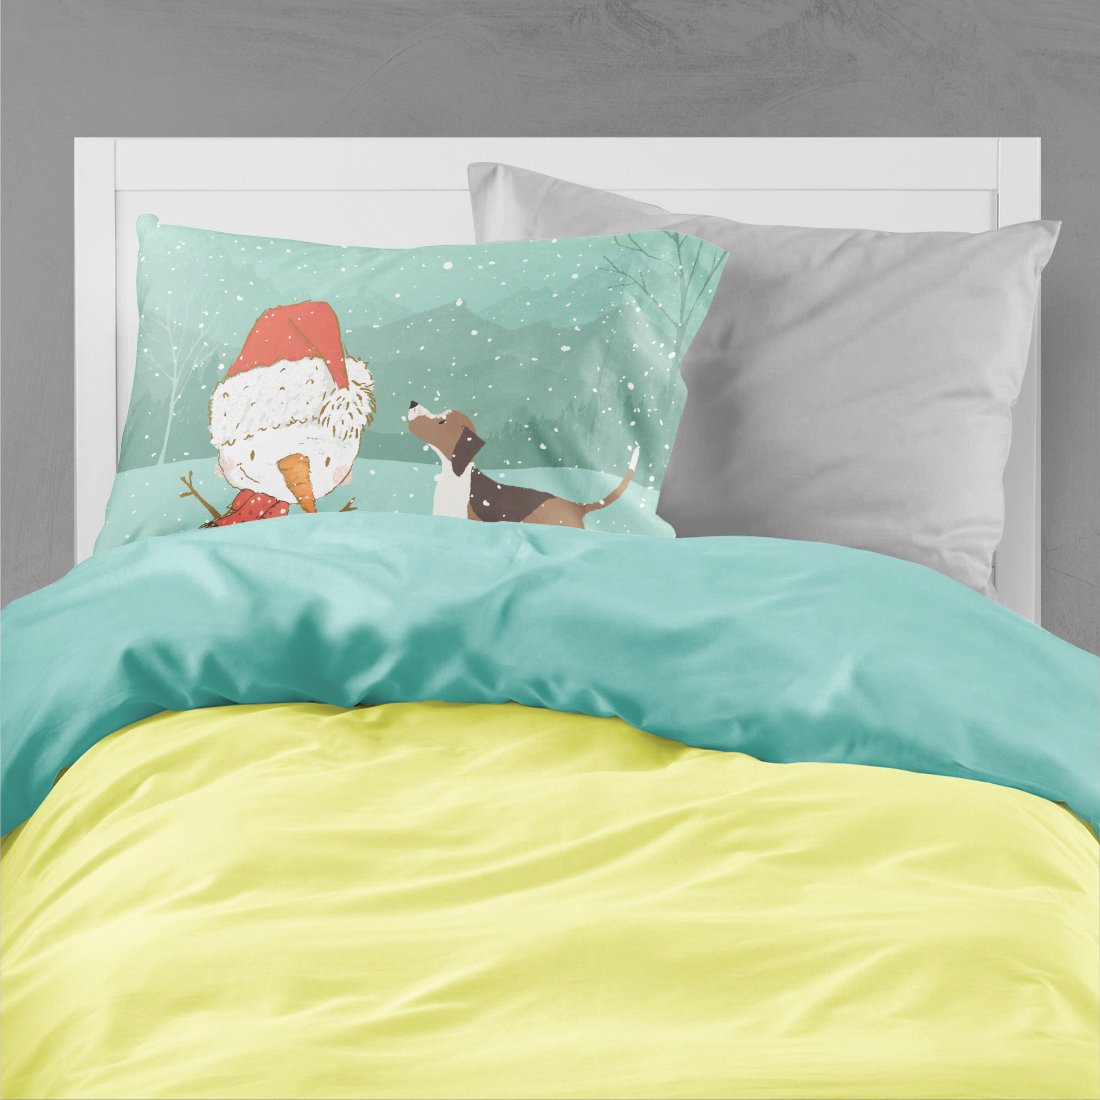 Beagle Snowman Christmas Fabric Standard Pillowcase CK2052PILLOWCASE by Caroline's Treasures